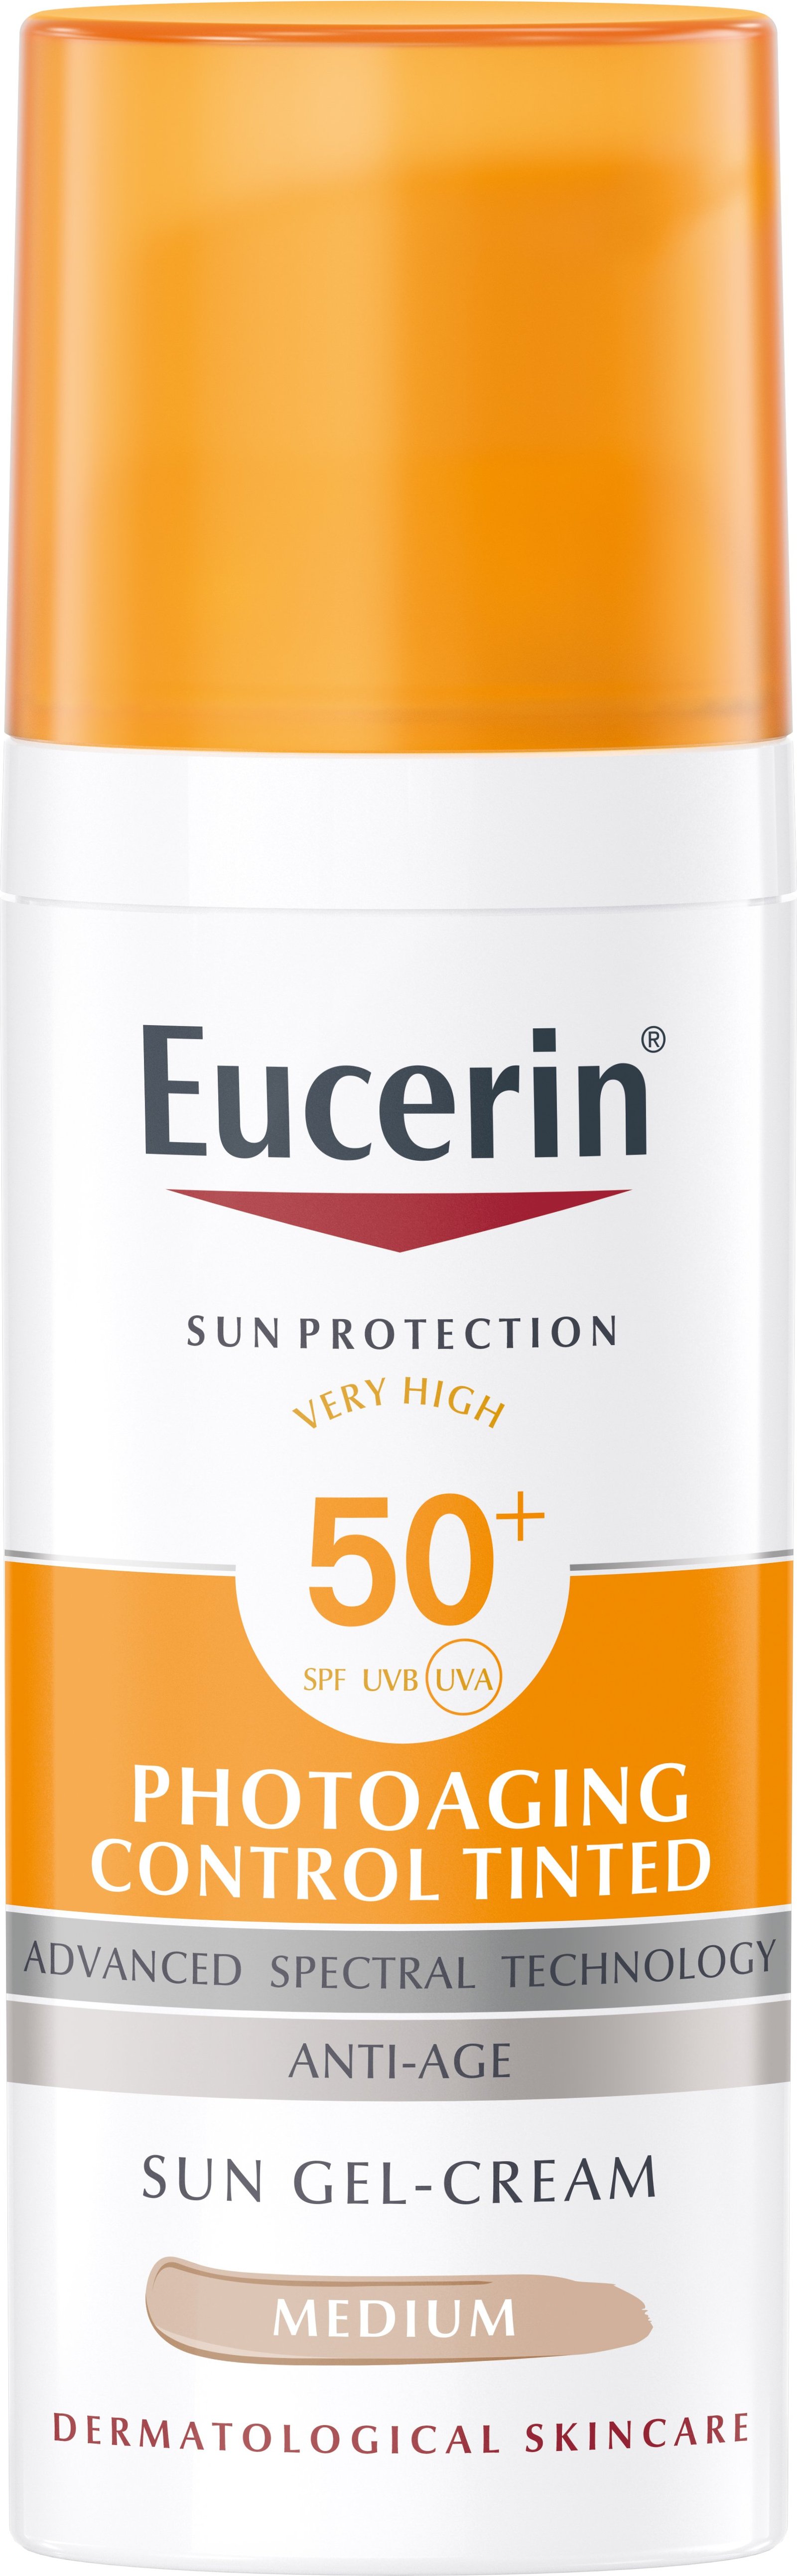 Eucerin Photoaging Control Tinted Sun-Gel-Gream SPF50+ Medium 50 ml